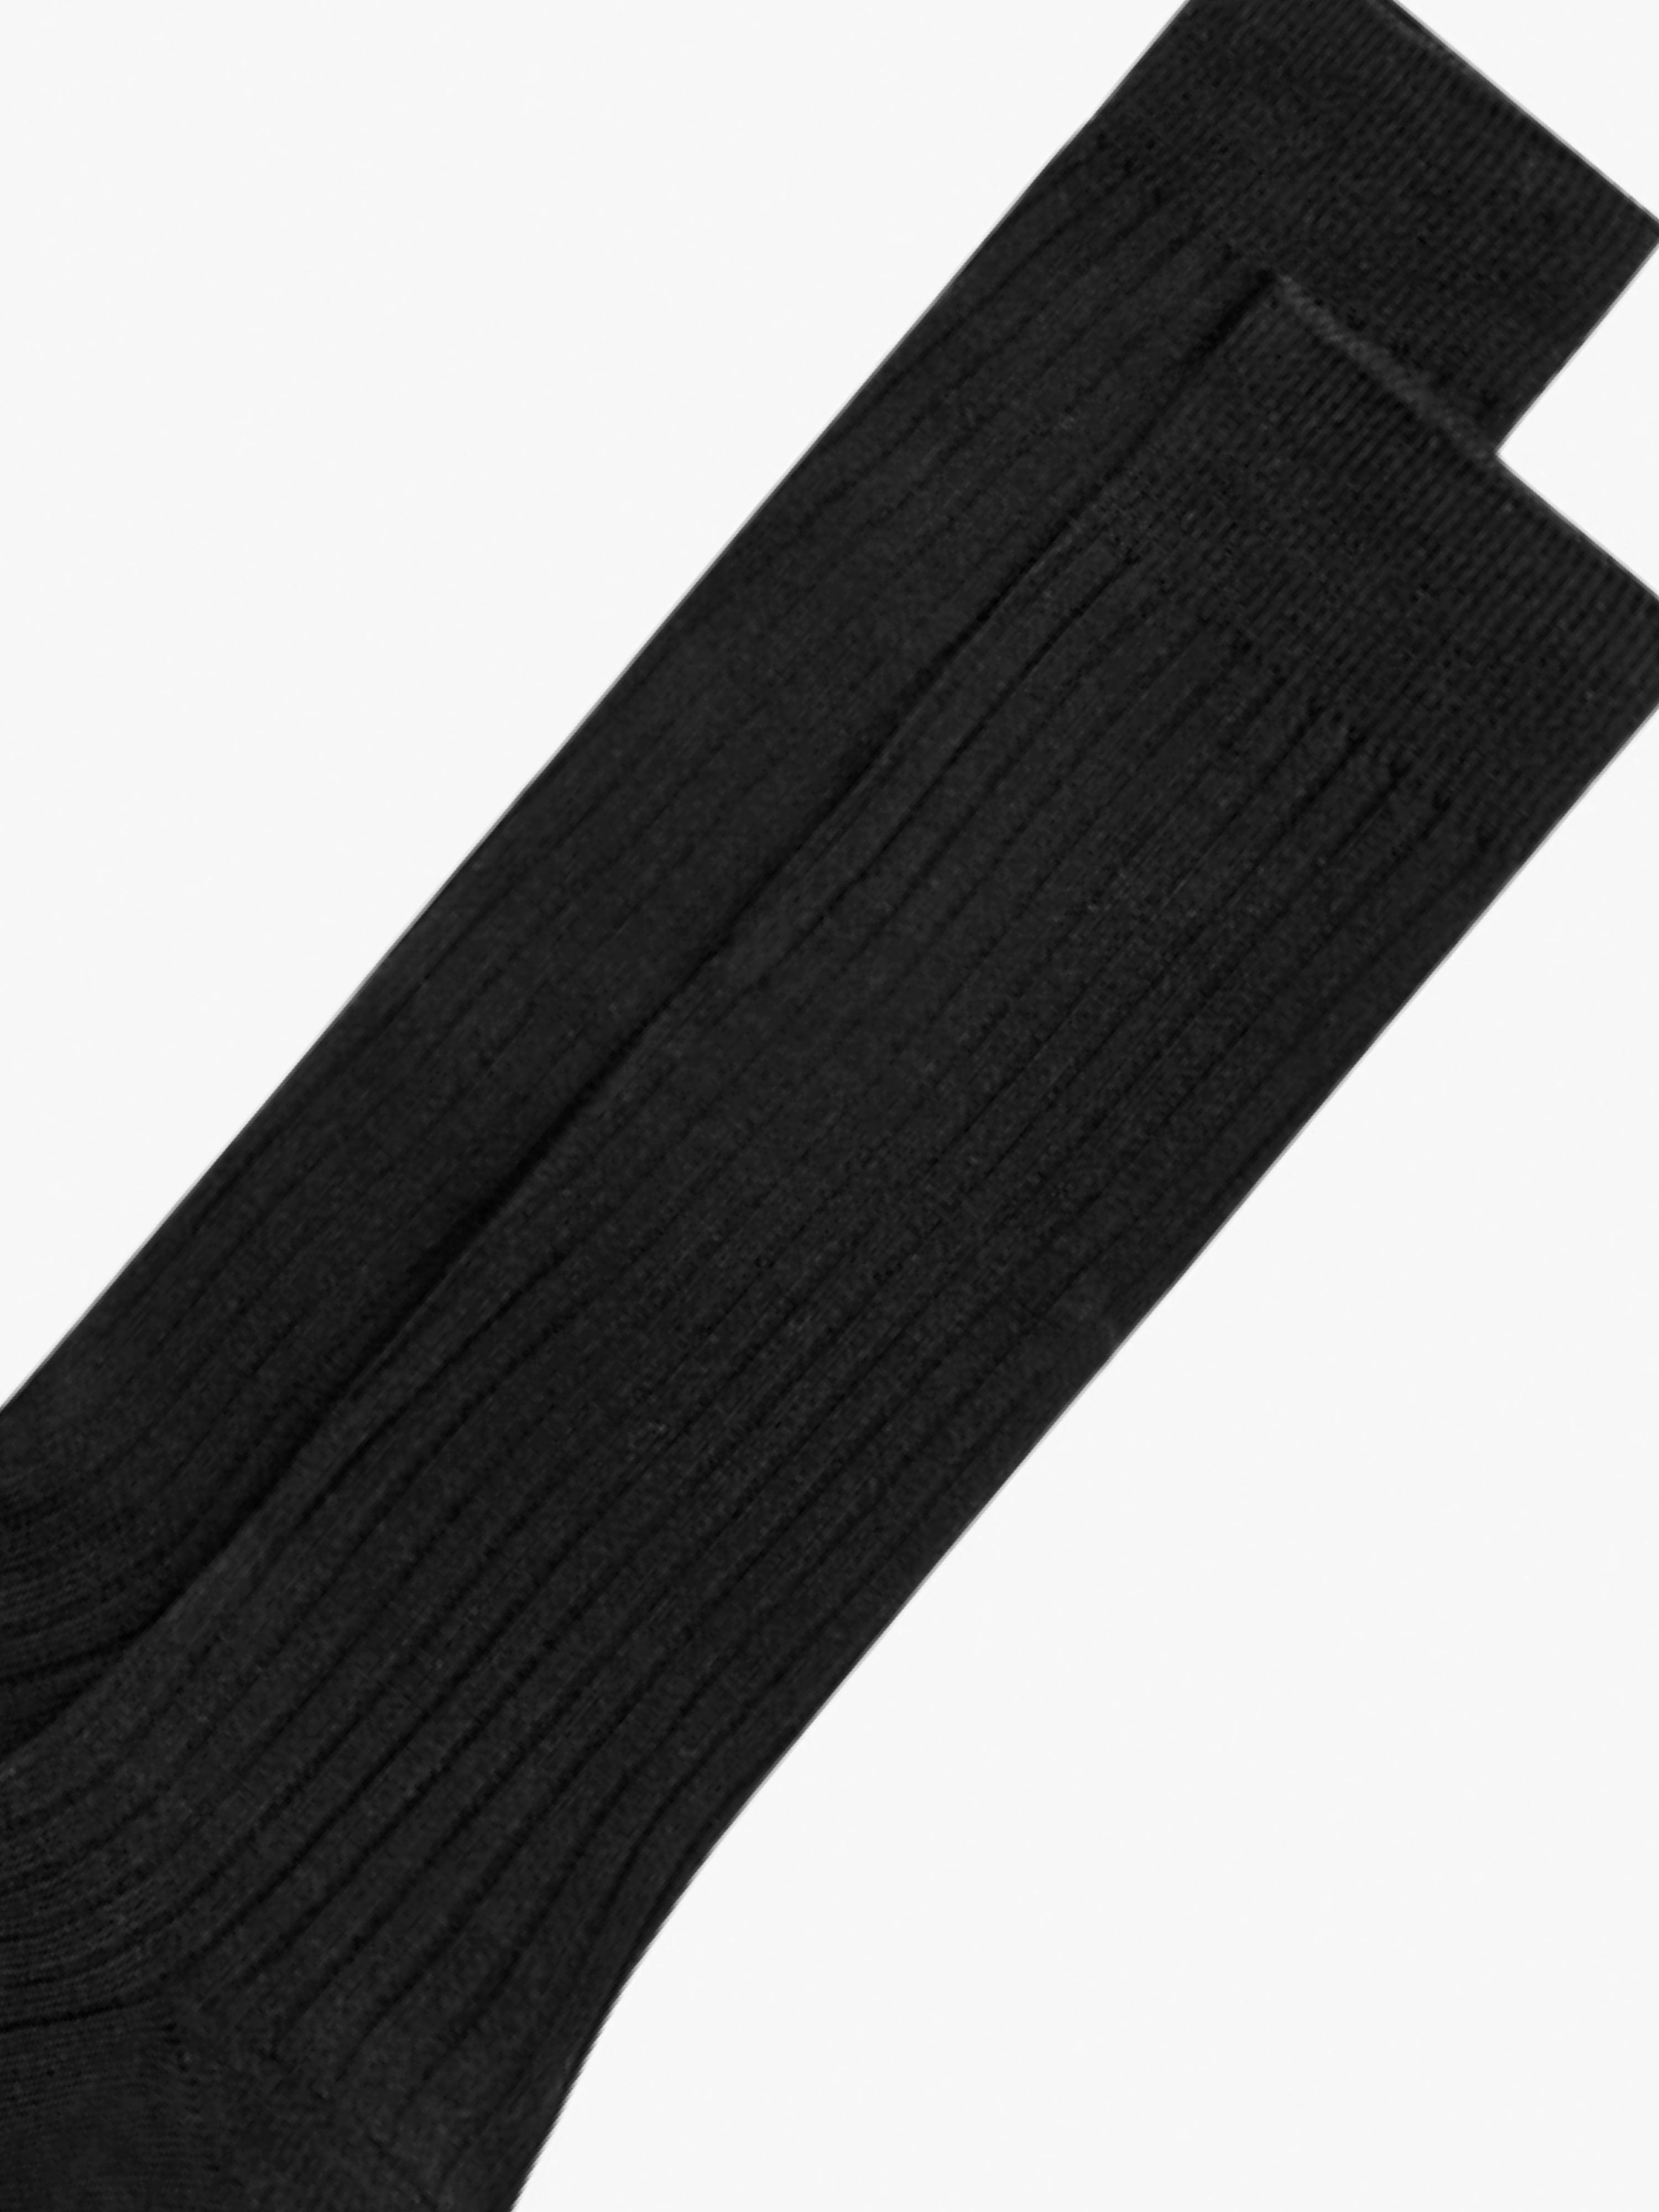 Black Ribbed Socks (2-pack) - Grand Le Mar